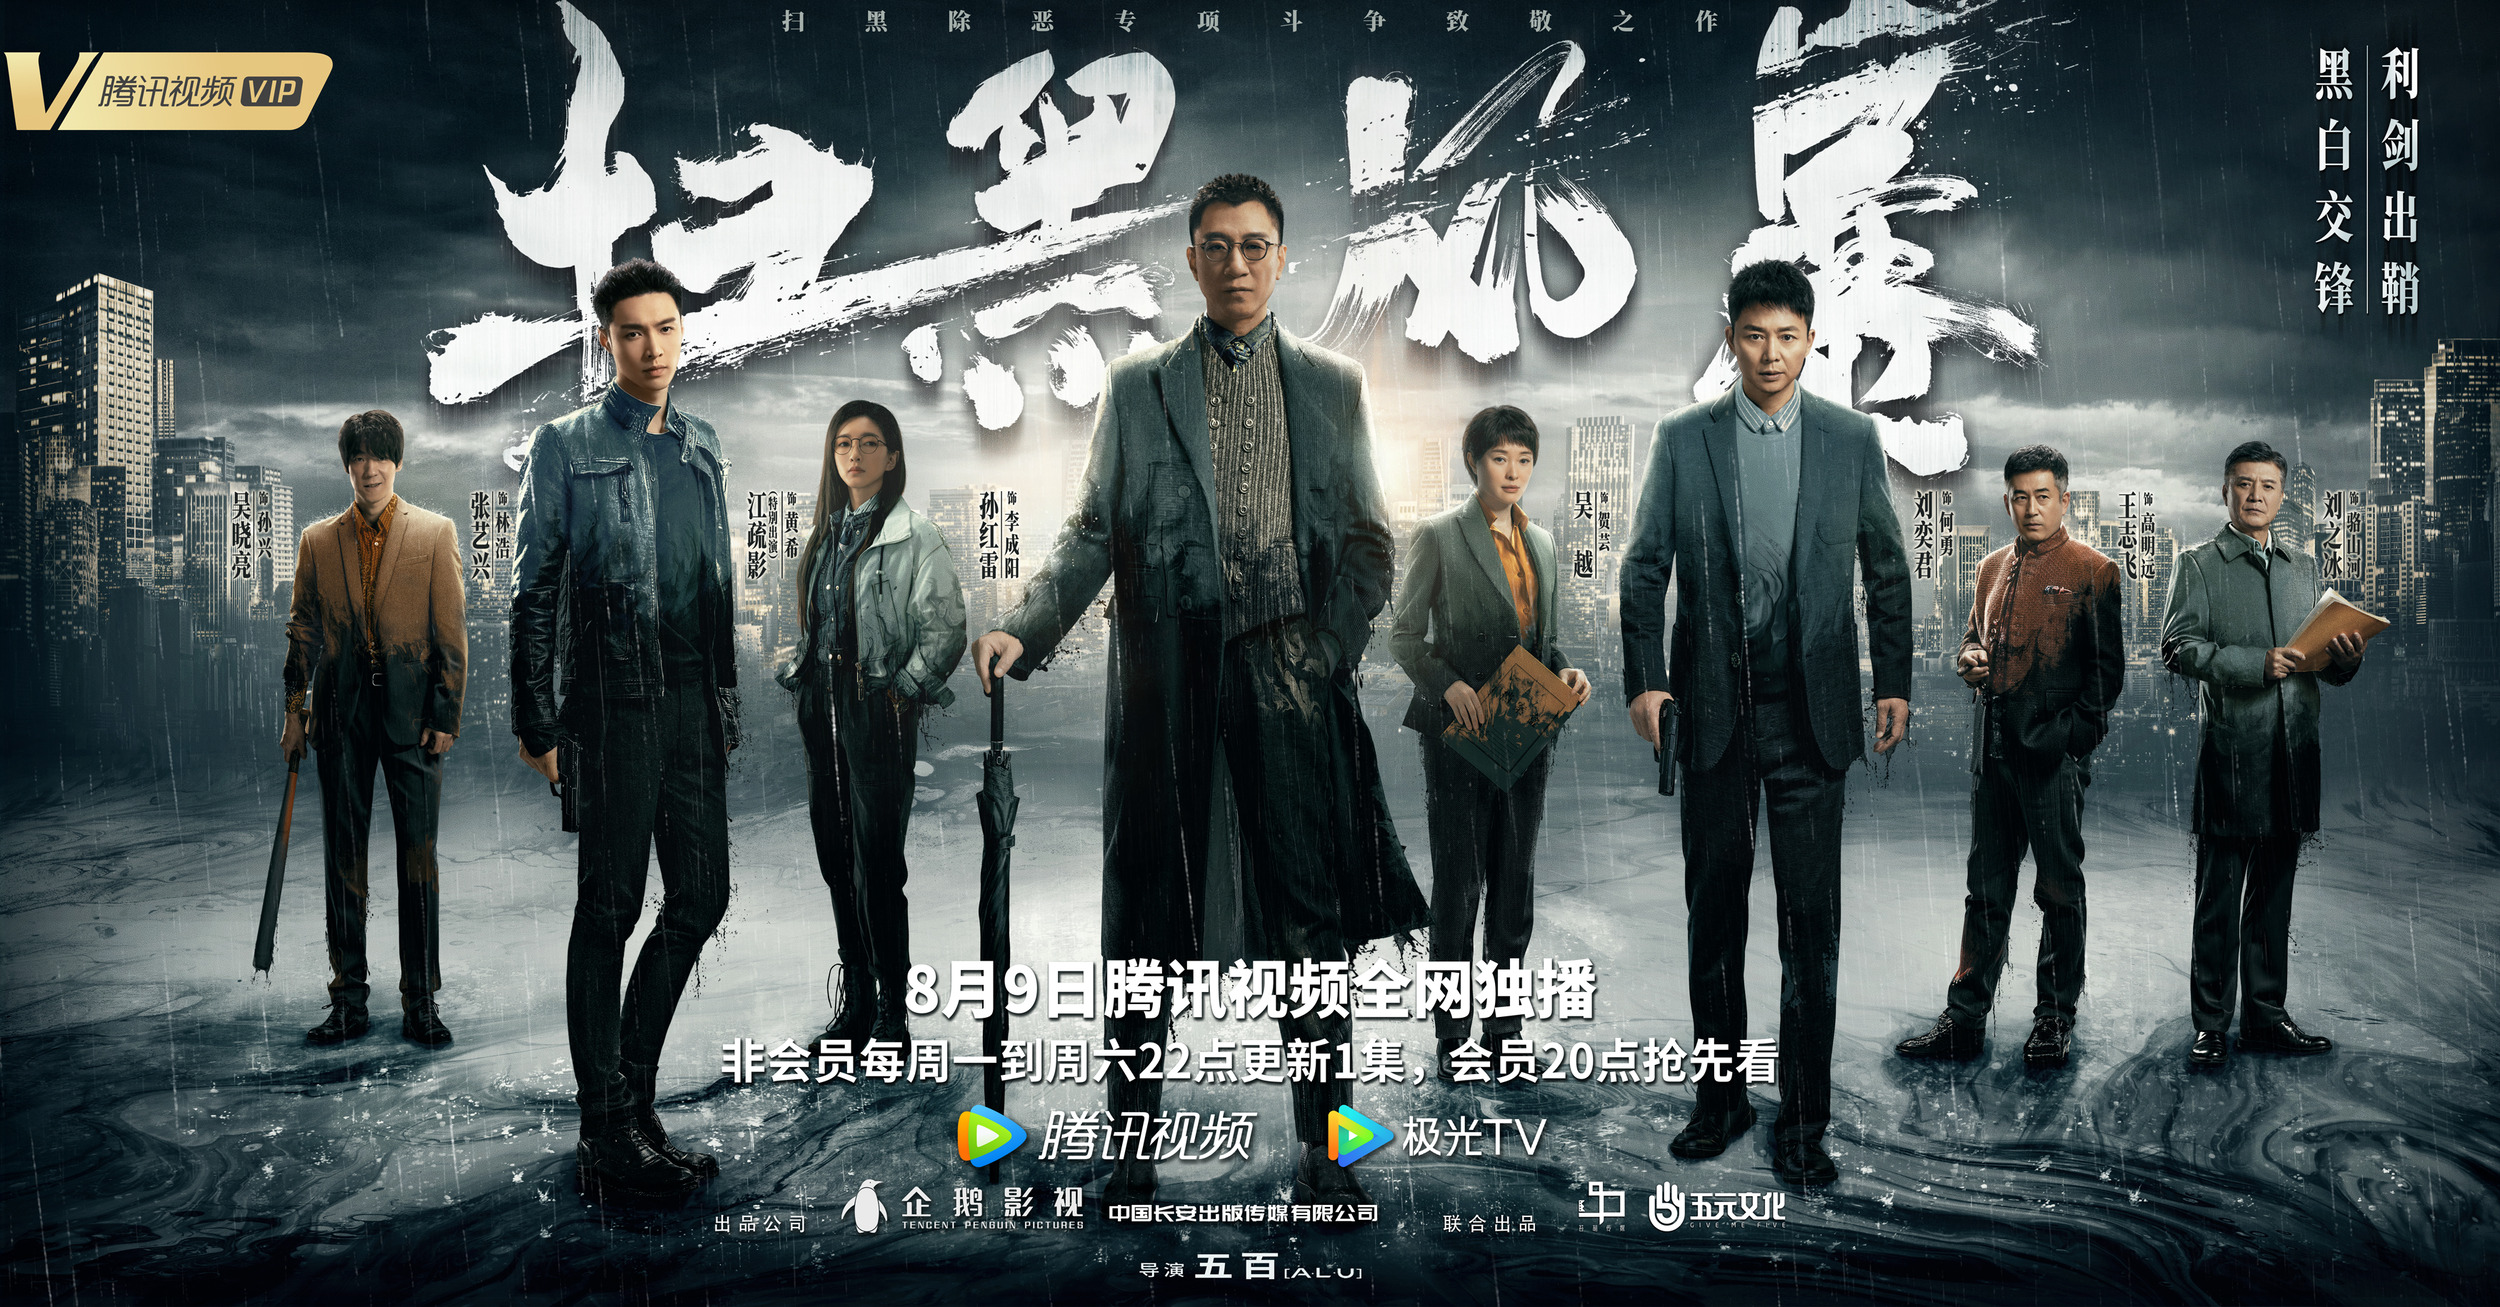 Mega Sized TV Poster Image for Sao hei feng bao (#1 of 9)